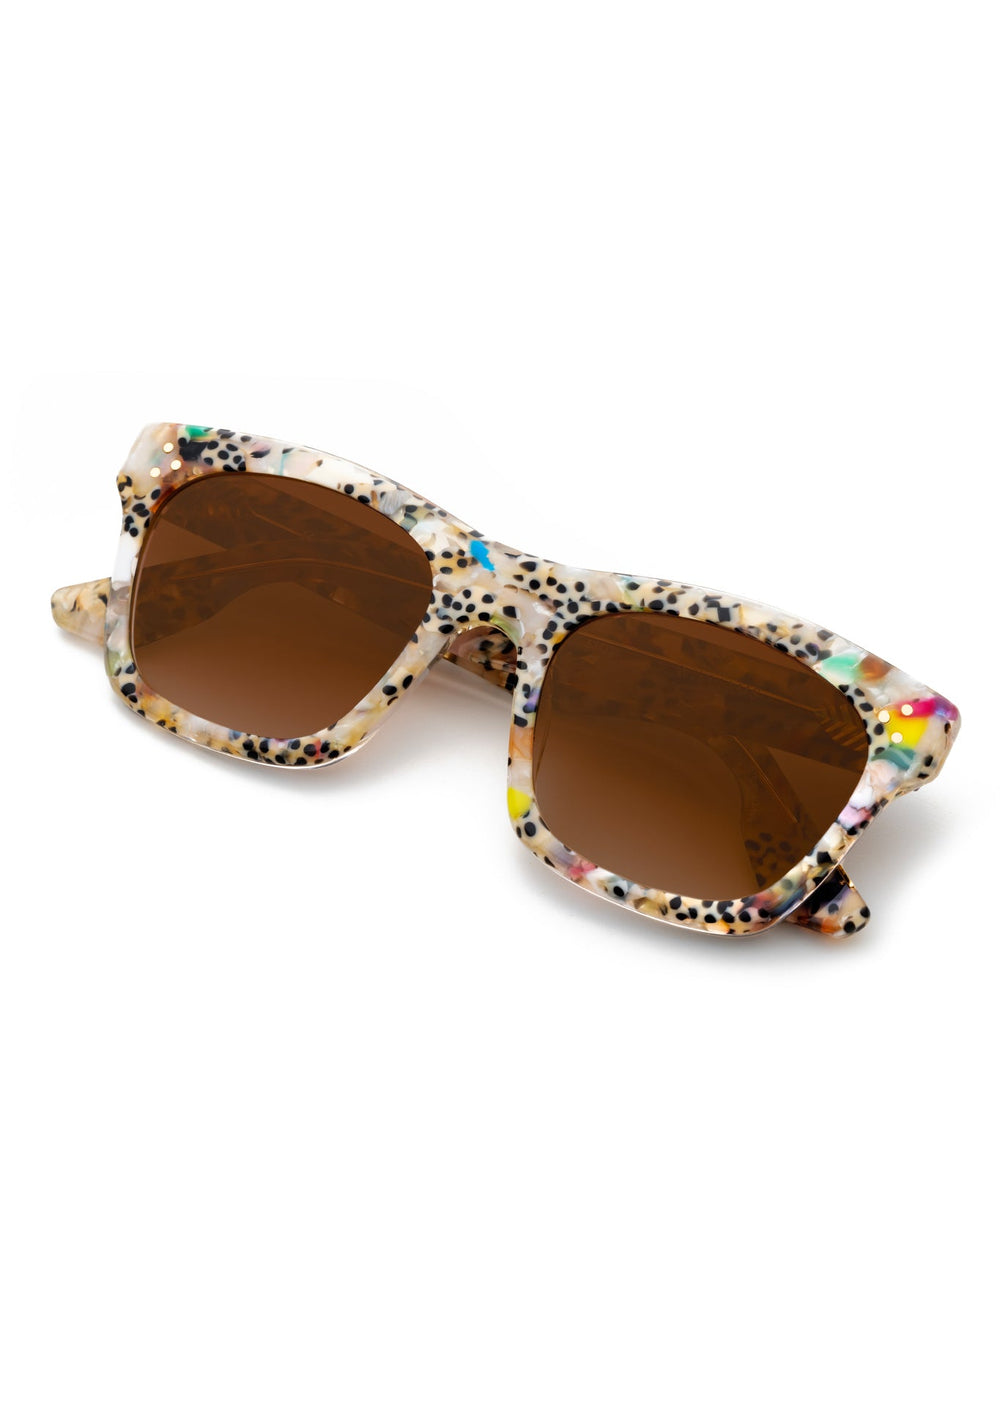 KREWE SUNGLASSES - WILLIAMS | Poppy over Crystal handcrafted, luxury colorful acetate wayfarer sunglasses